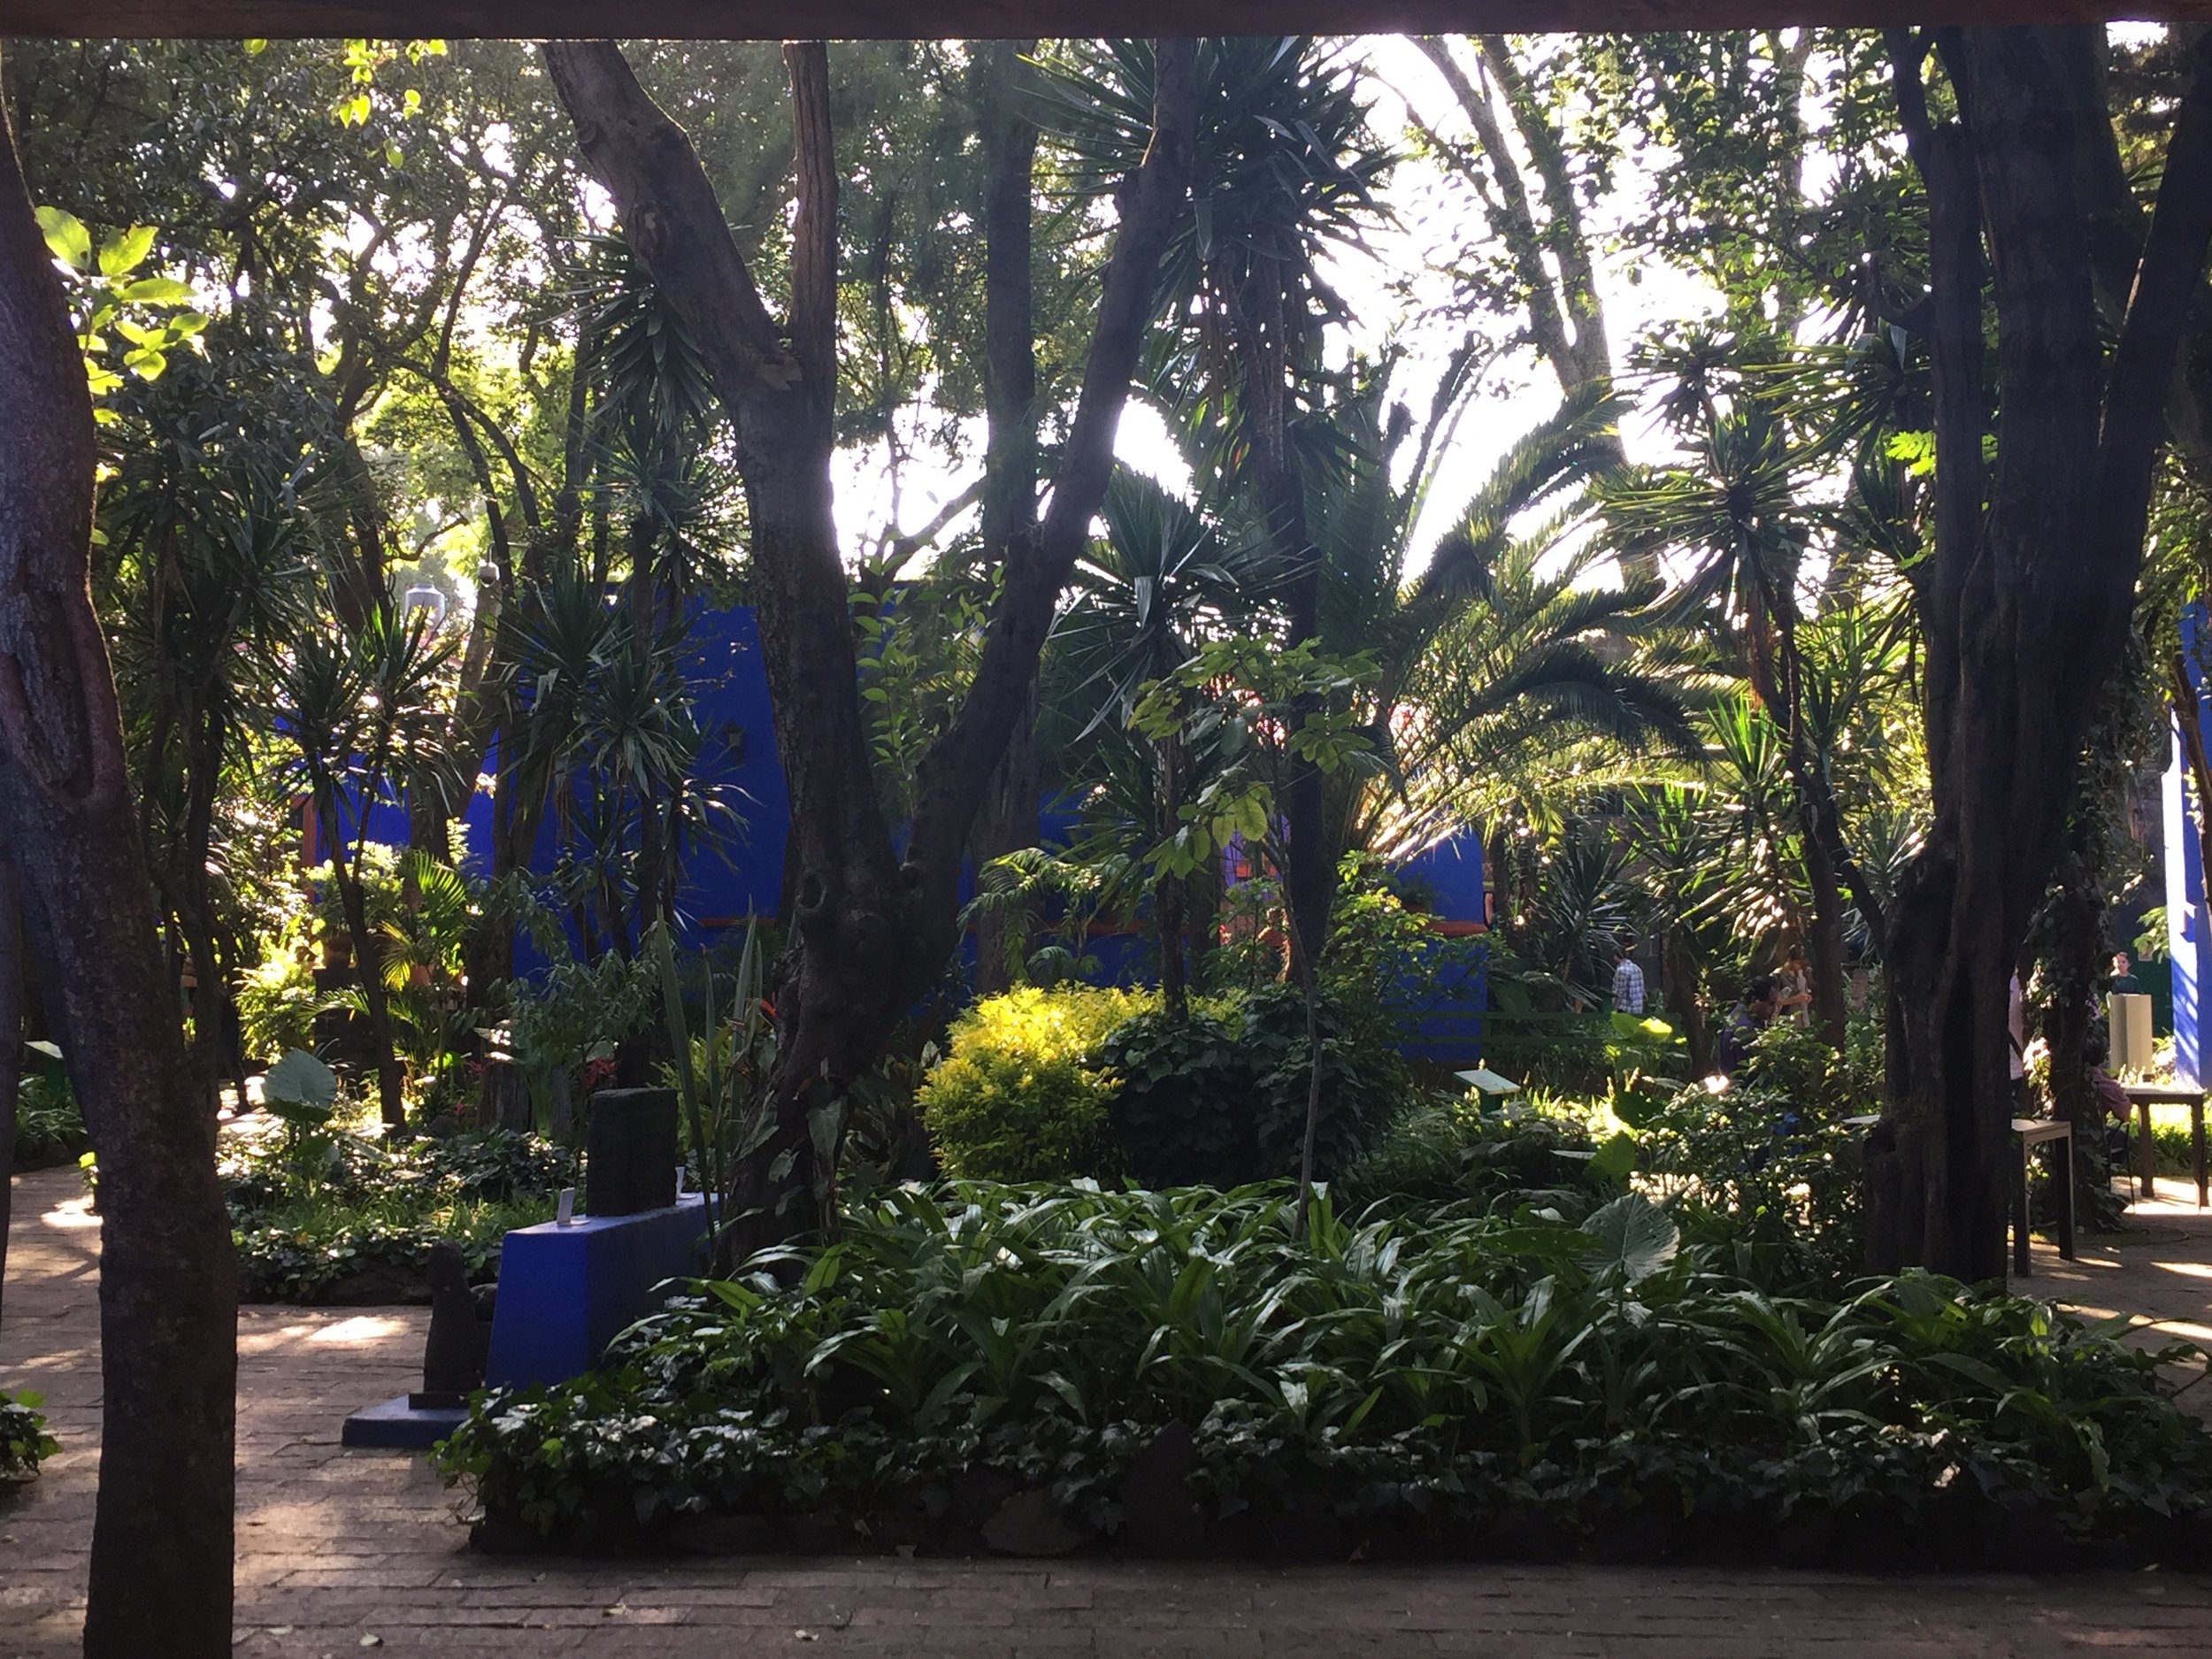 Courtyard of La Casa Azul, home of Frida Kahlo and Diego Rivera